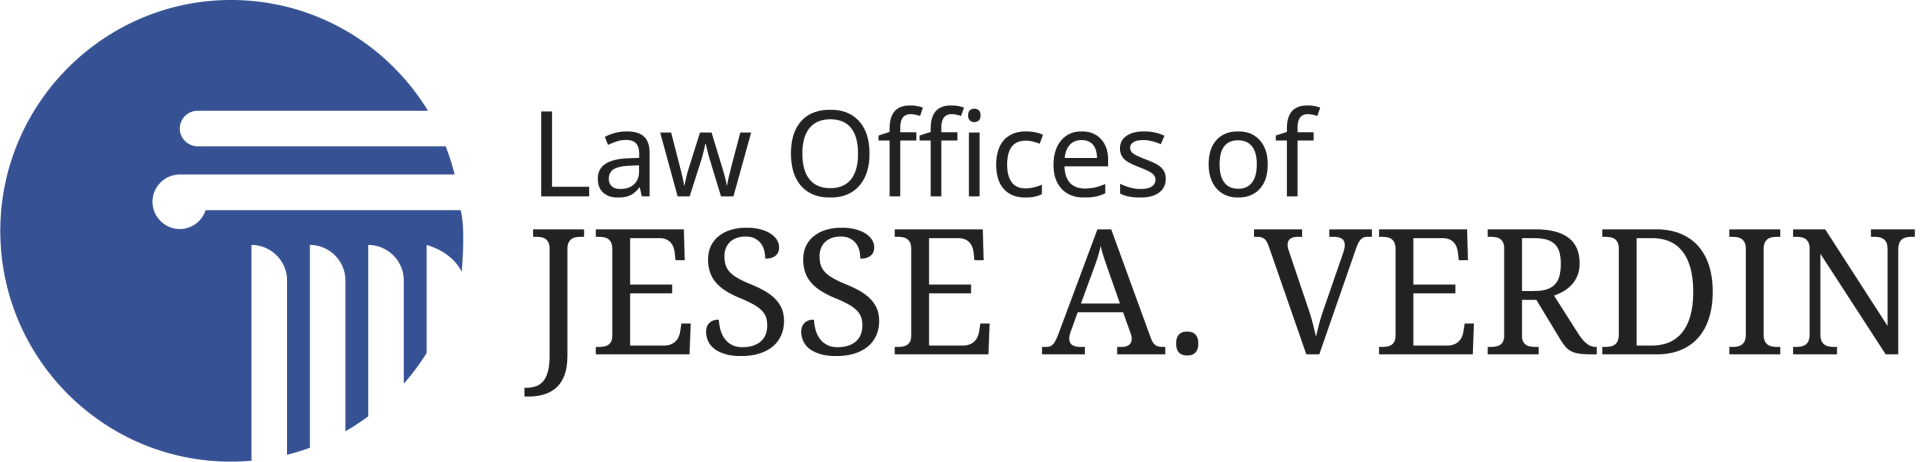 Law Offices of Jesse A. Verdin Logo